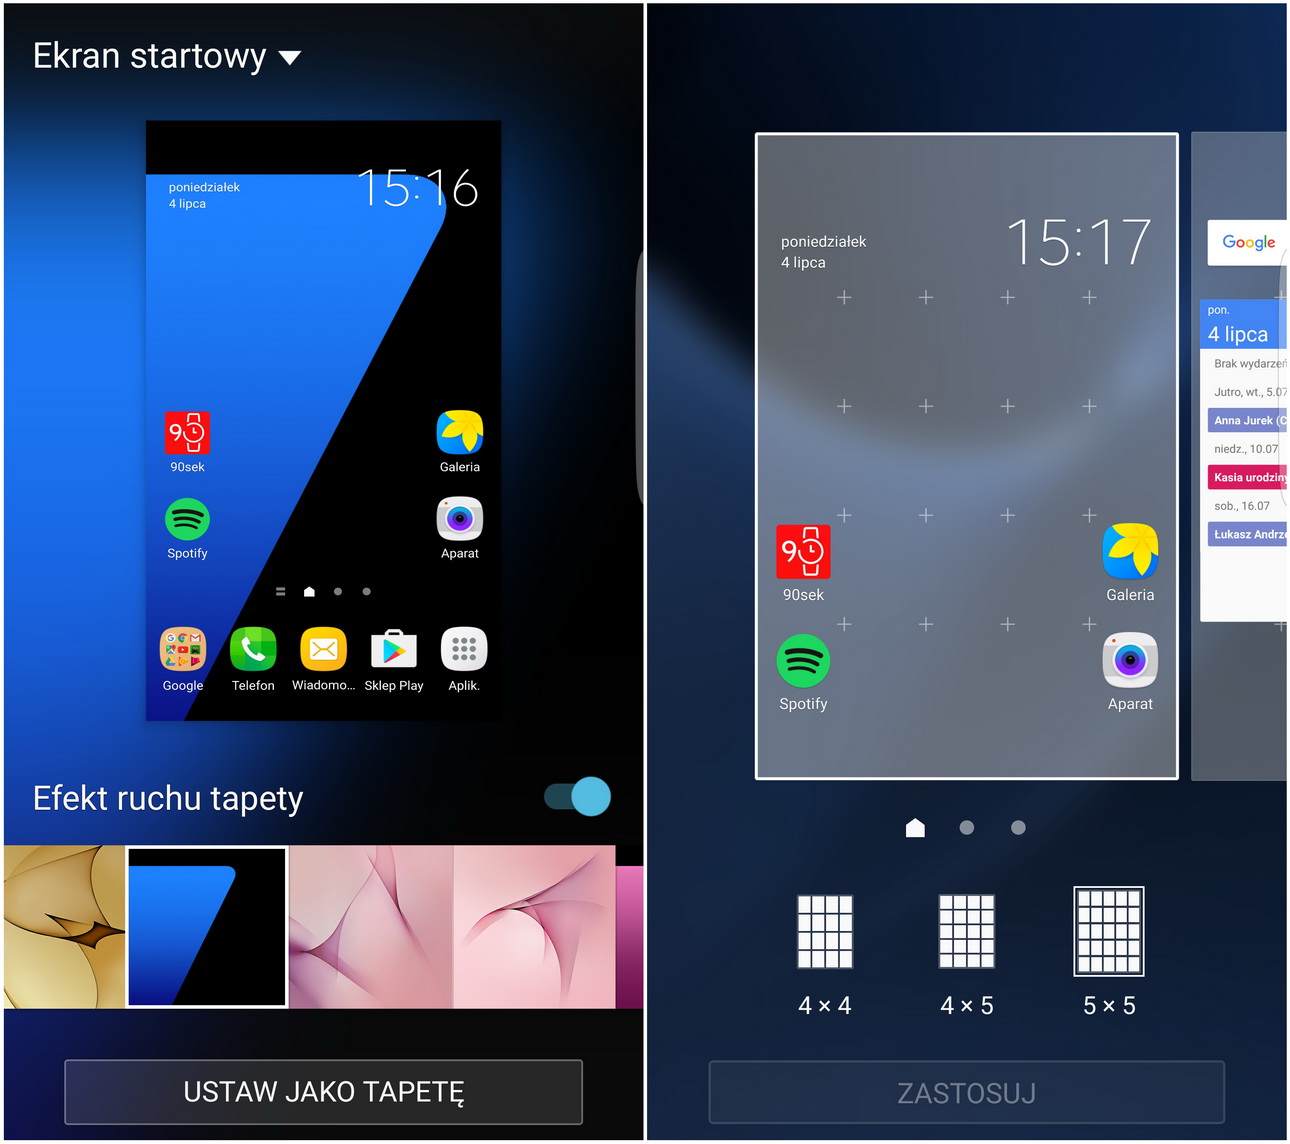 Samsung Galaxy S7 (SM-G935) TouchWiz - recenzja 90sekund.pl